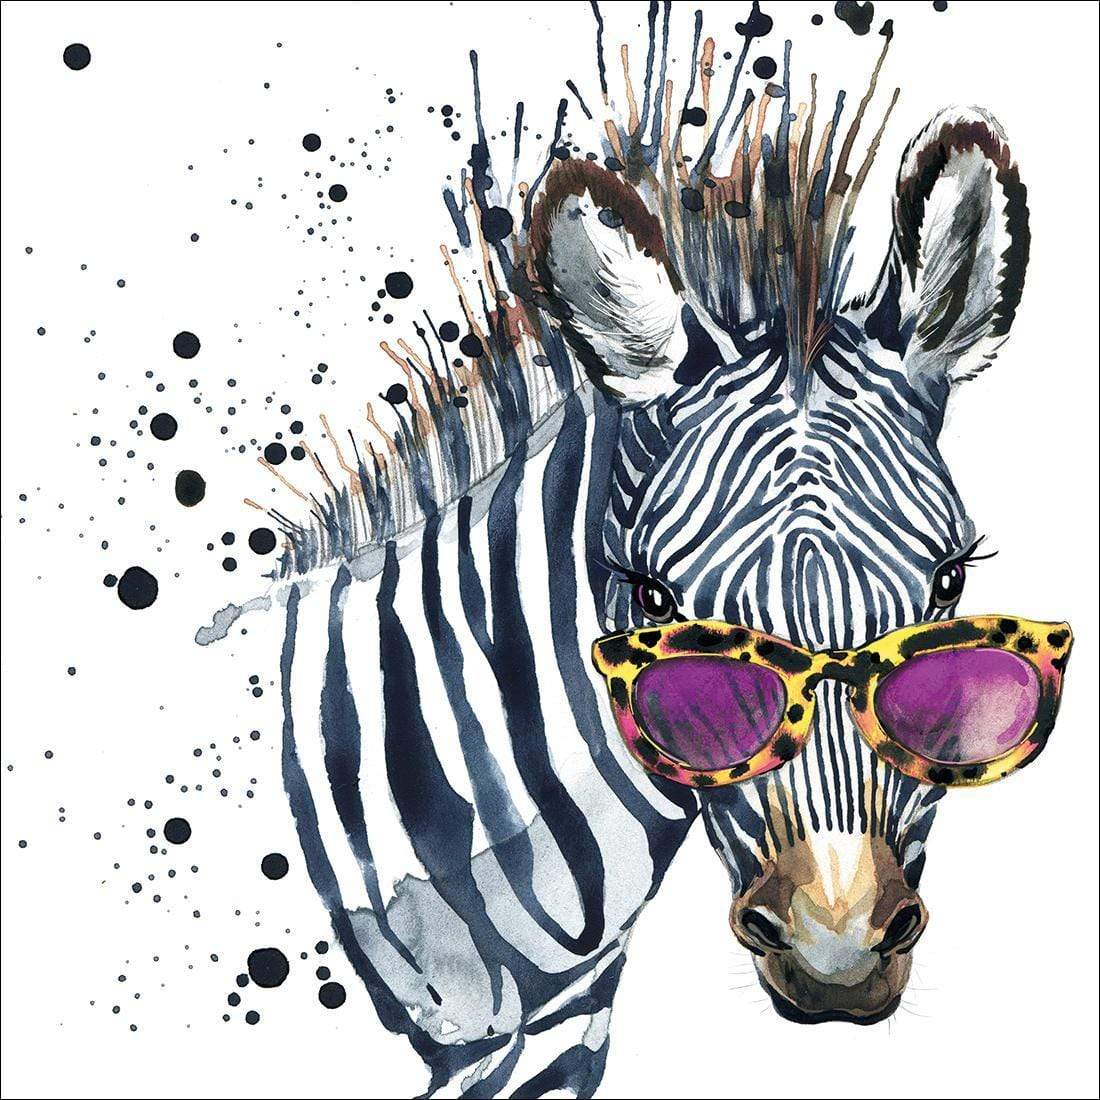 Cool Zebra (square) - wallart-australia - Canvas